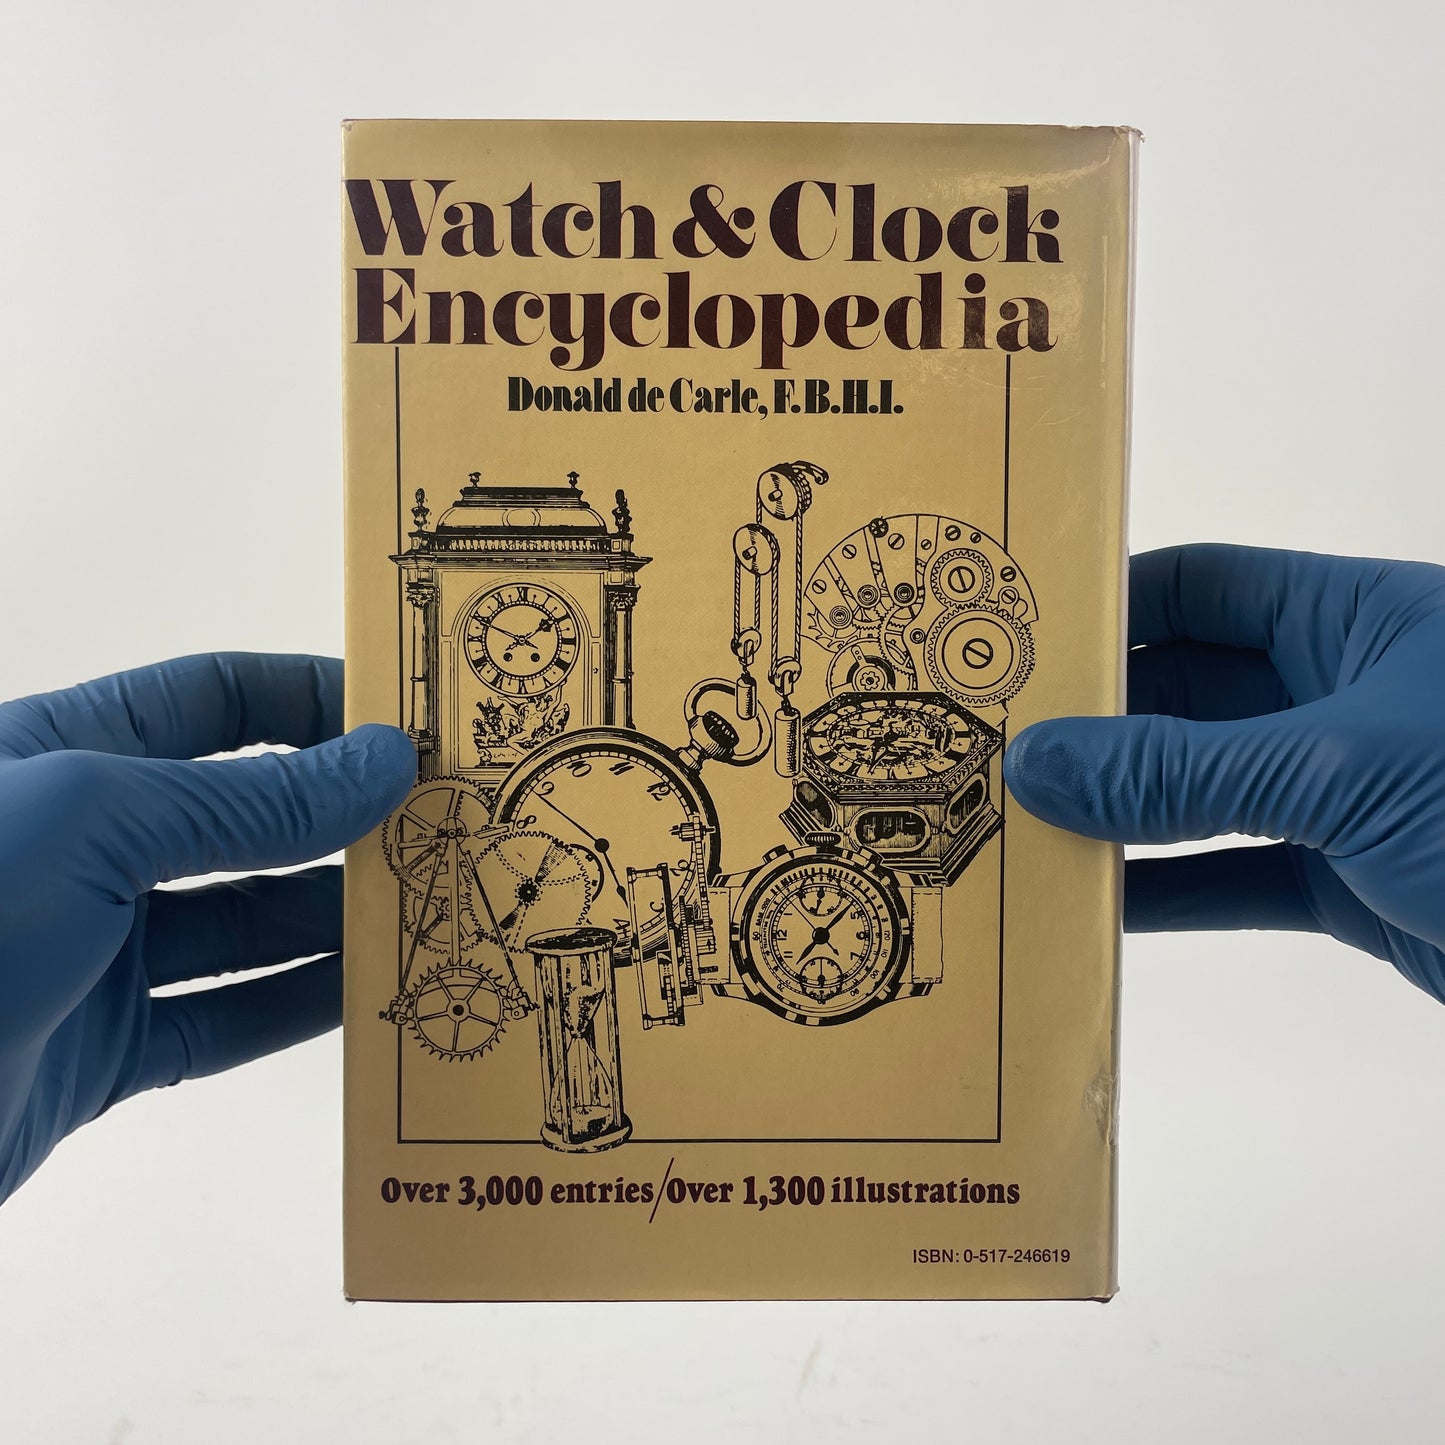 May Lot 94- Watch & Clock Encyclopedia